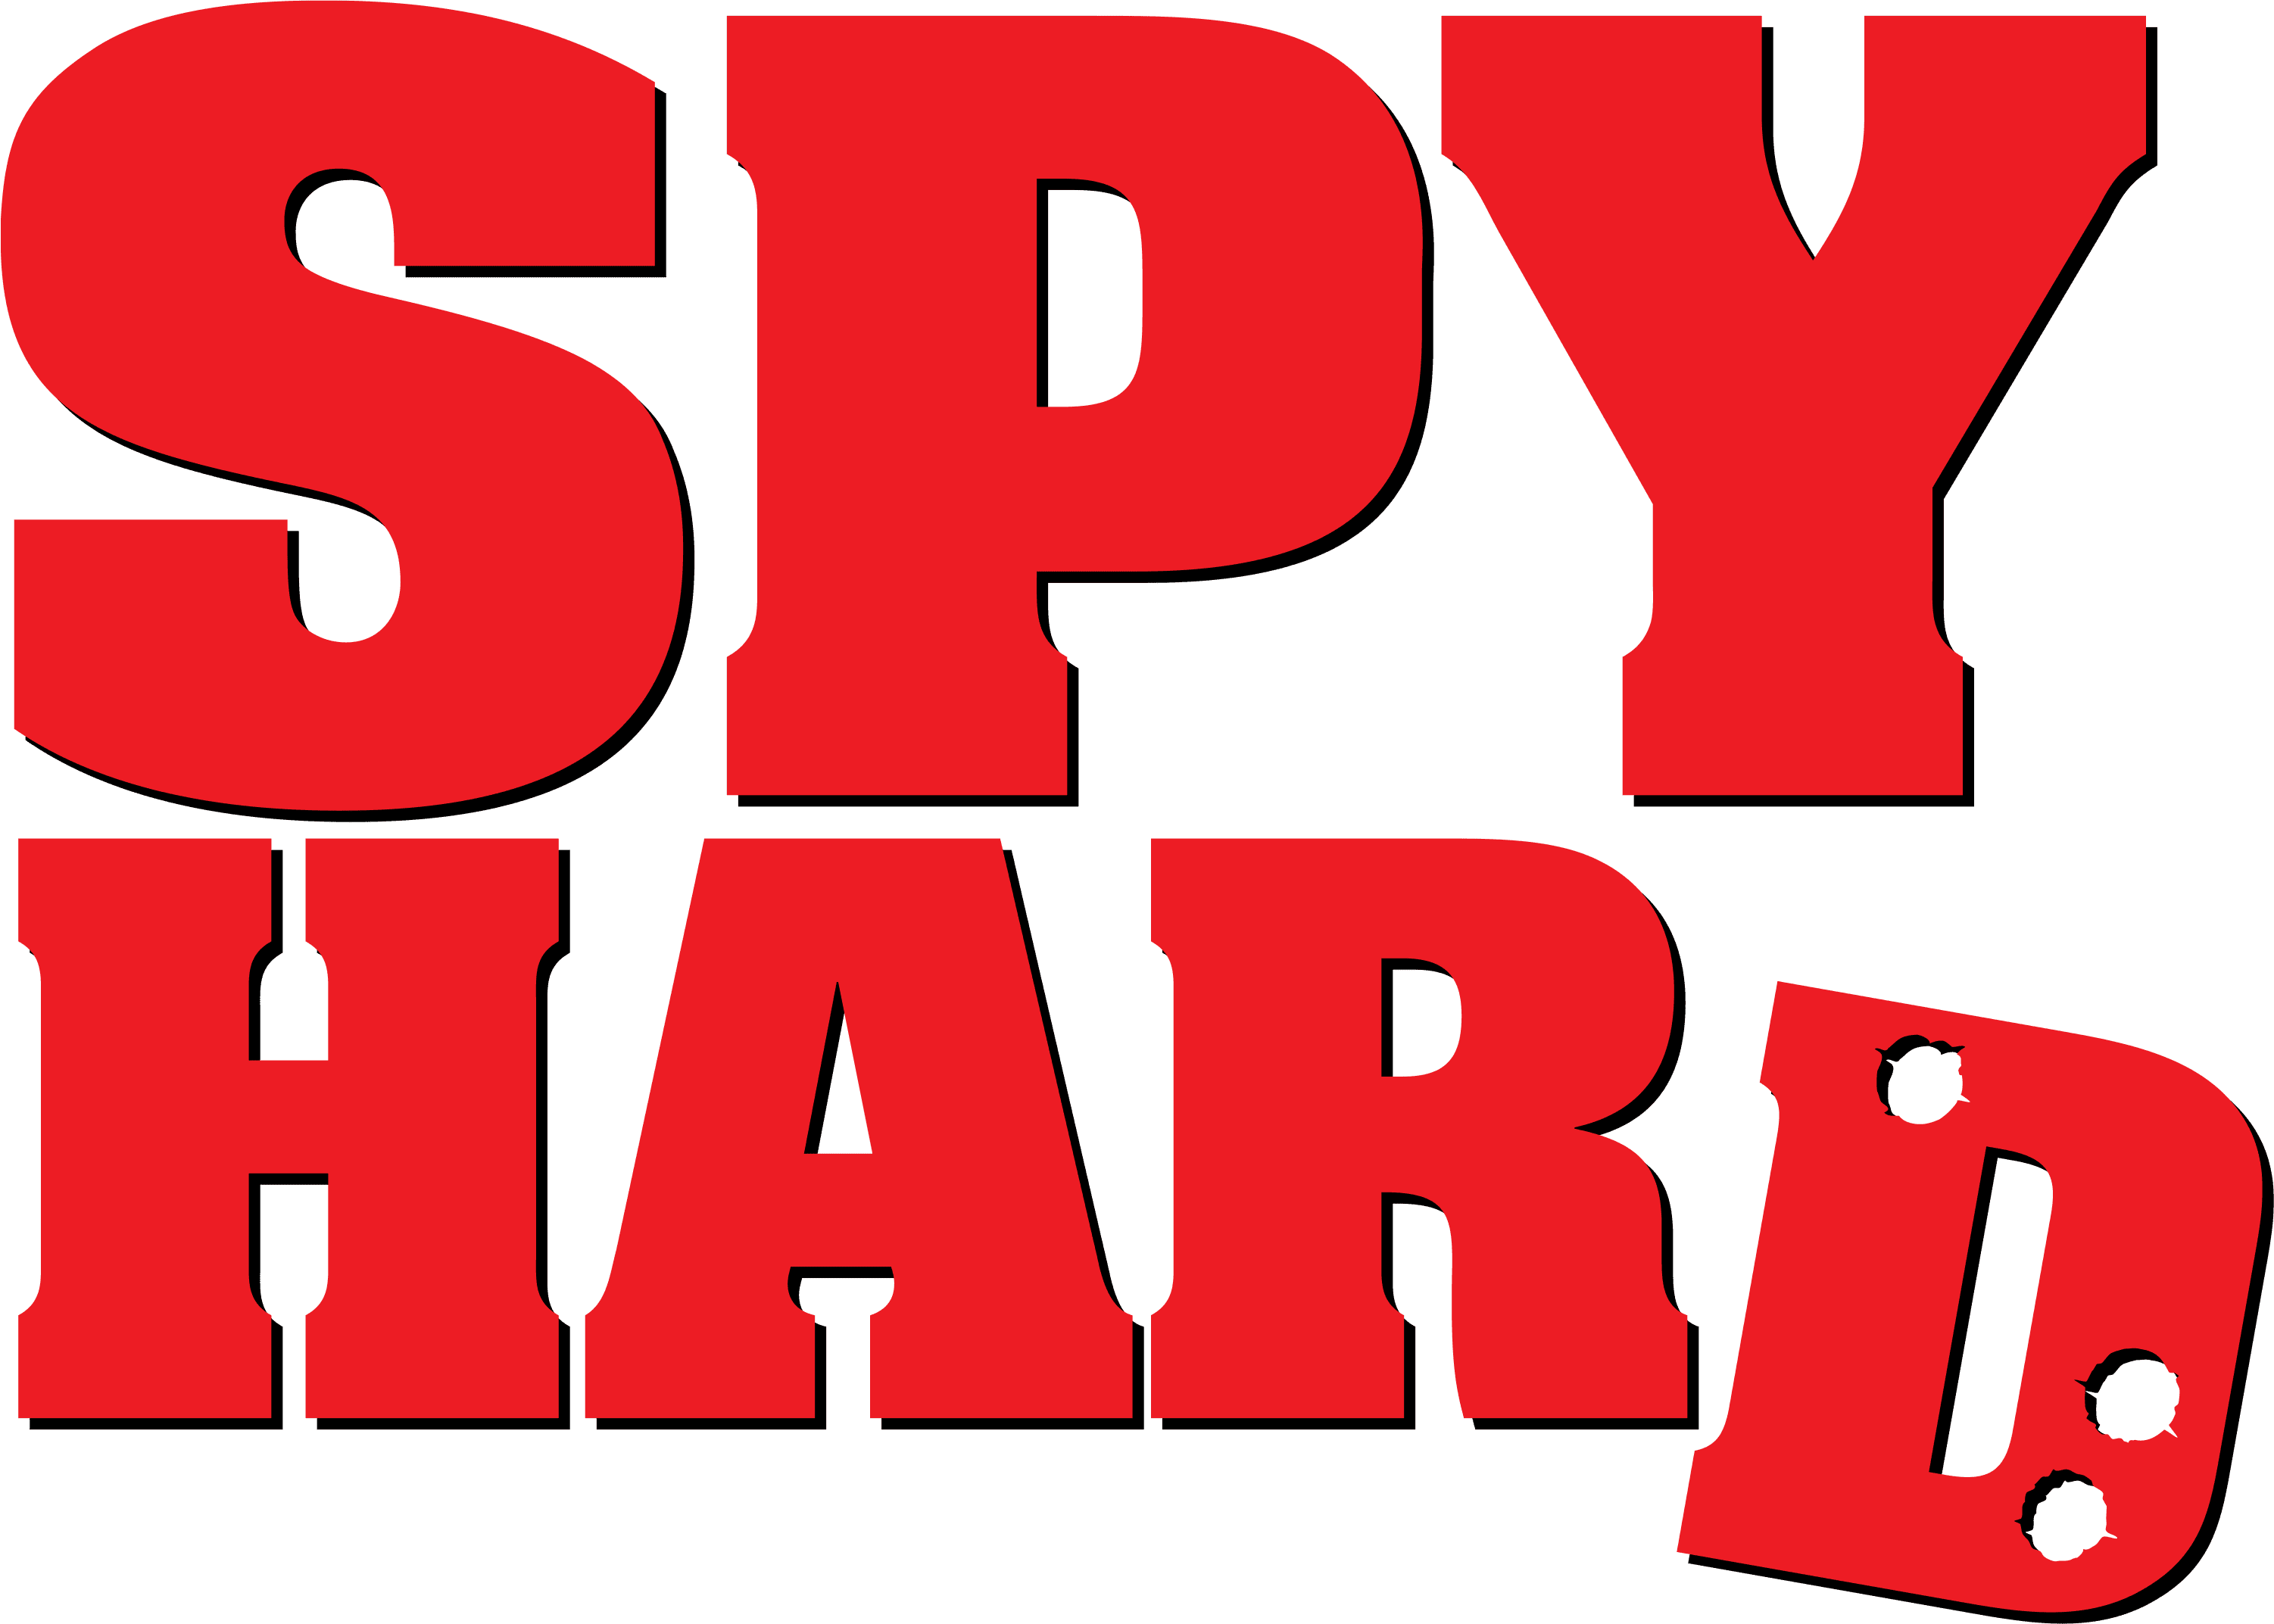 Spy Hard logo